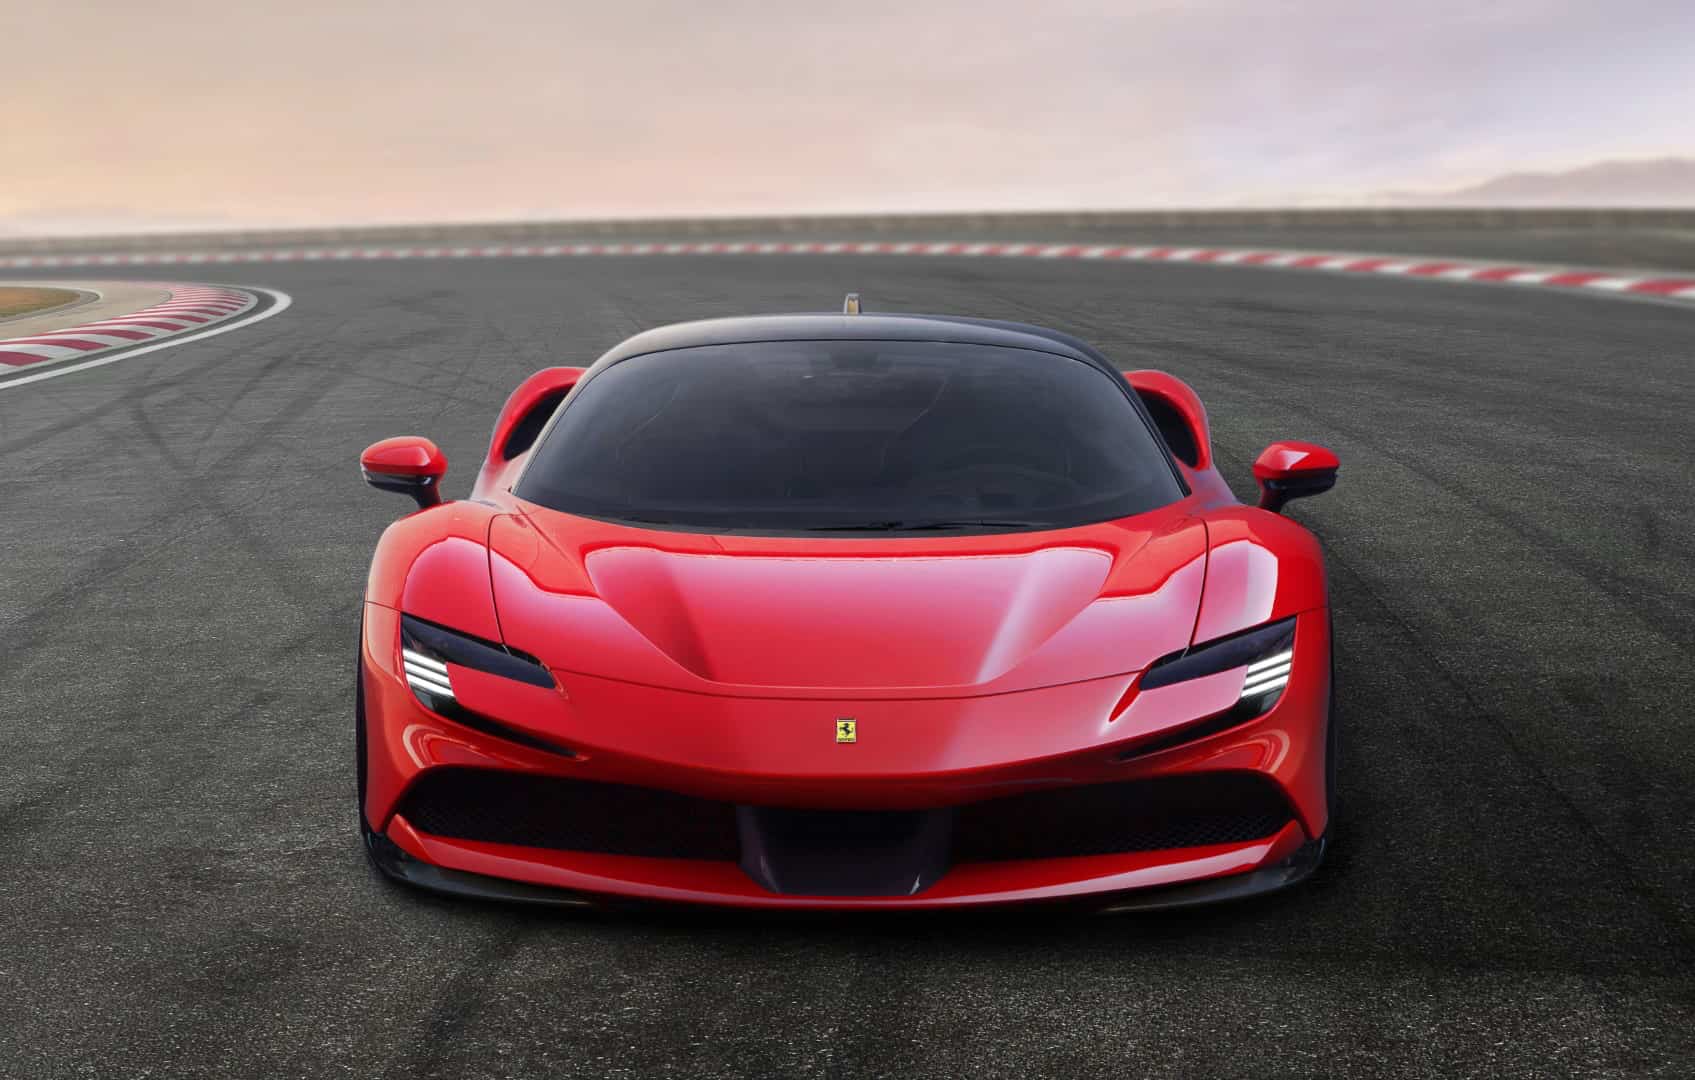 Gorgeous Beasts top 5 Italian luxury car brands